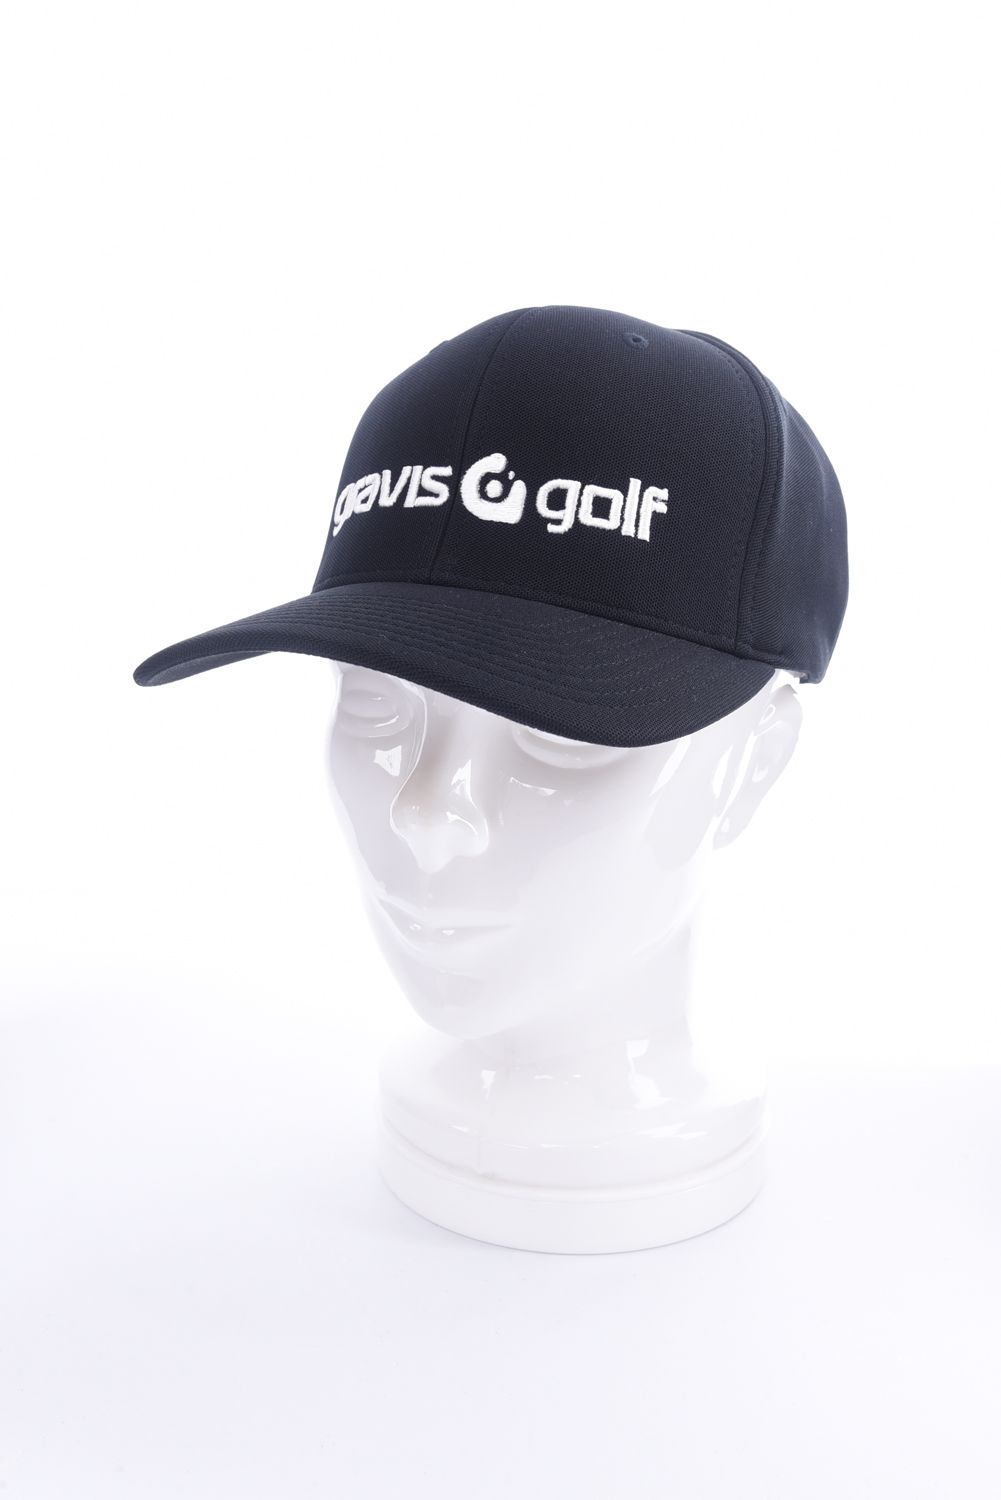 gravis golf - G-ICON FITTED CAP / ブランドロゴ刺繍 キャップ ...